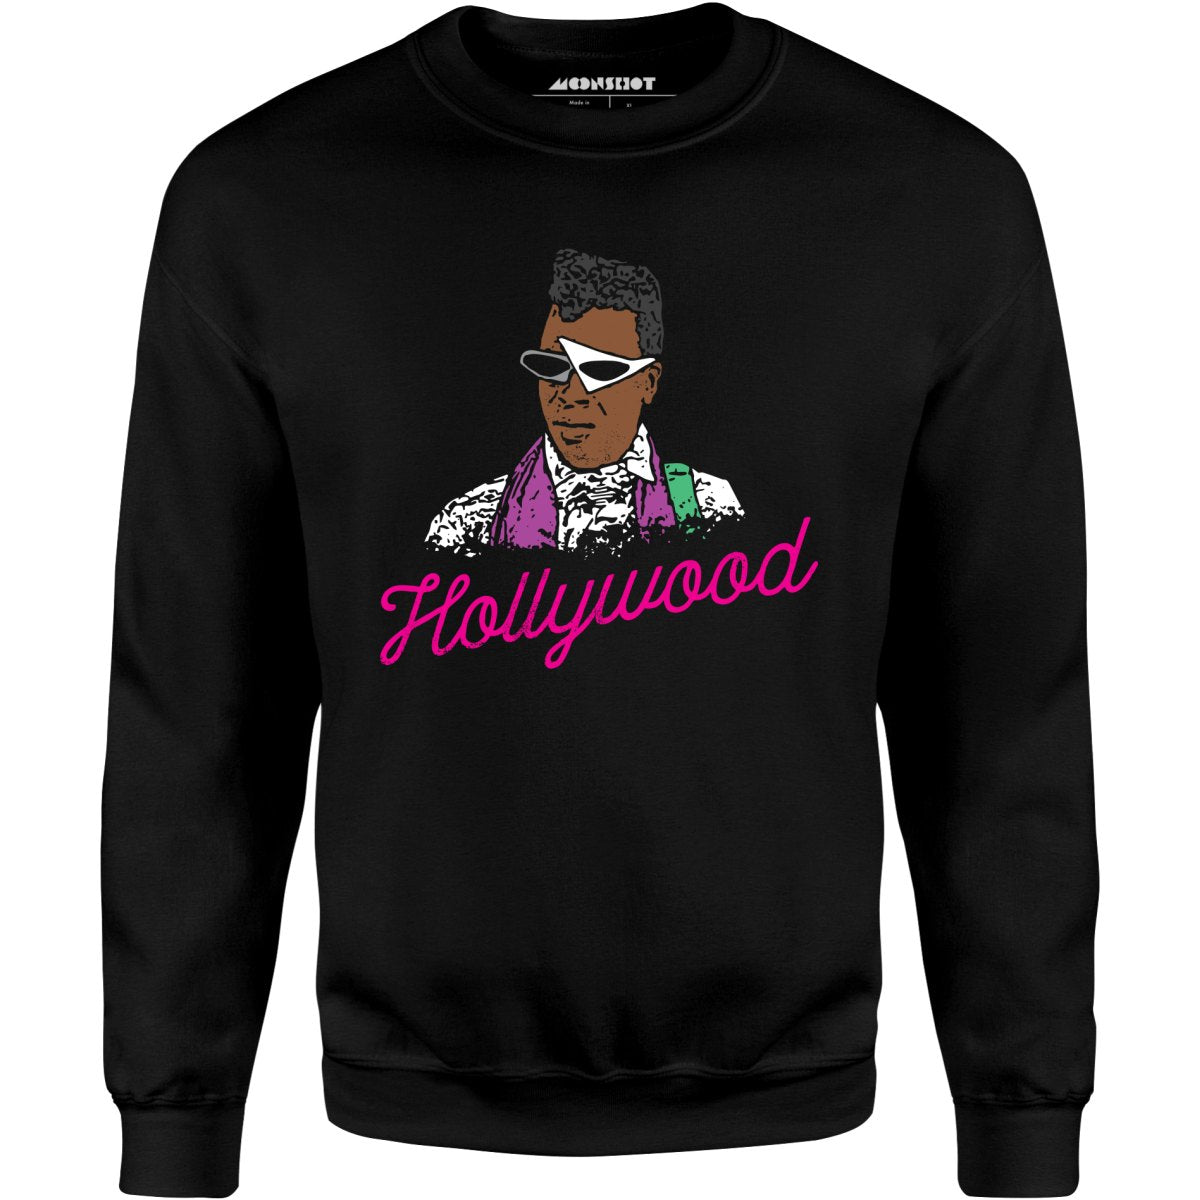 Hollywood - Mannequin - Unisex Sweatshirt